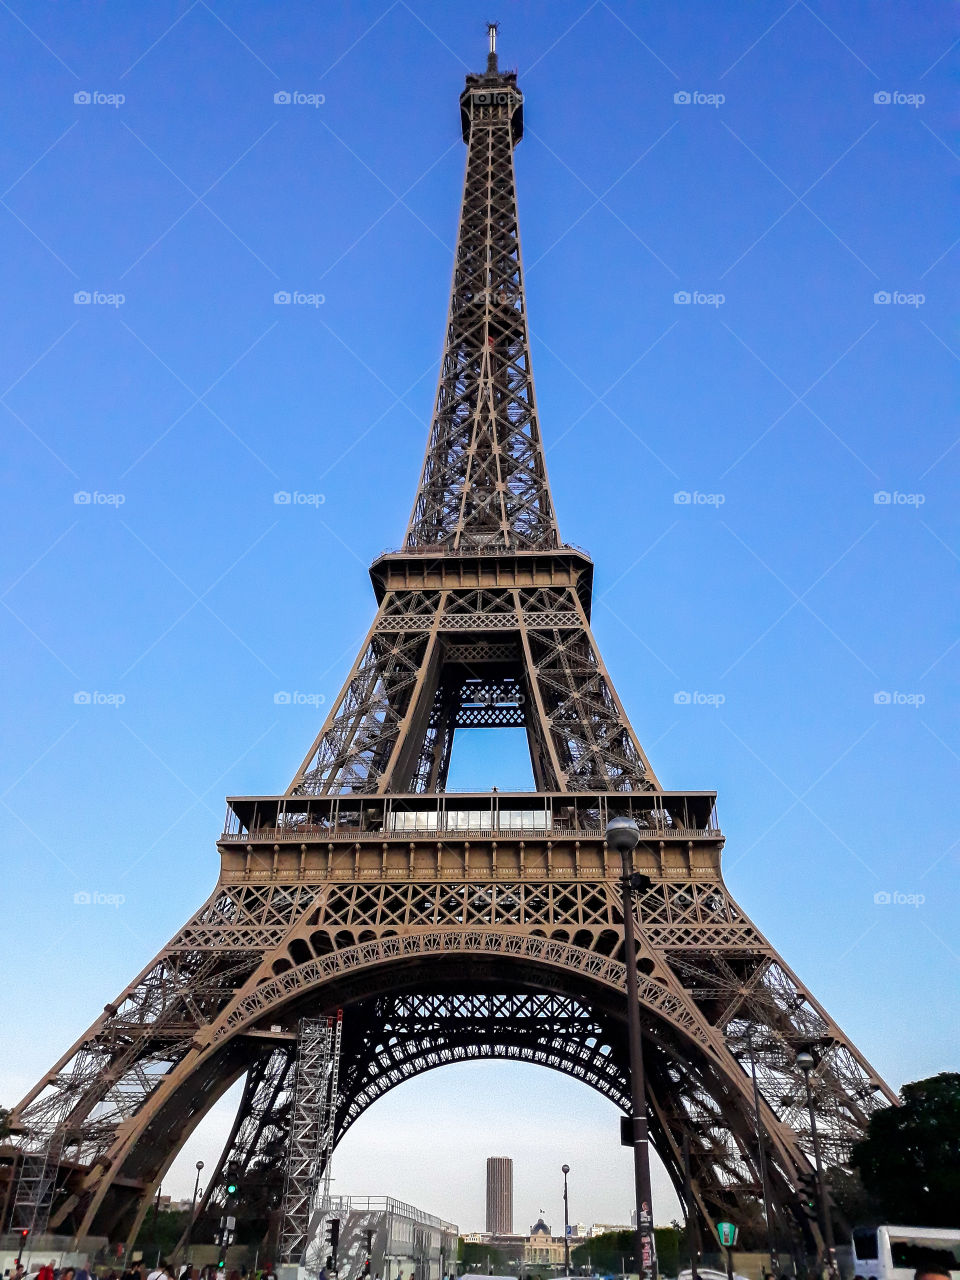 Eiffel Tower, Paris.